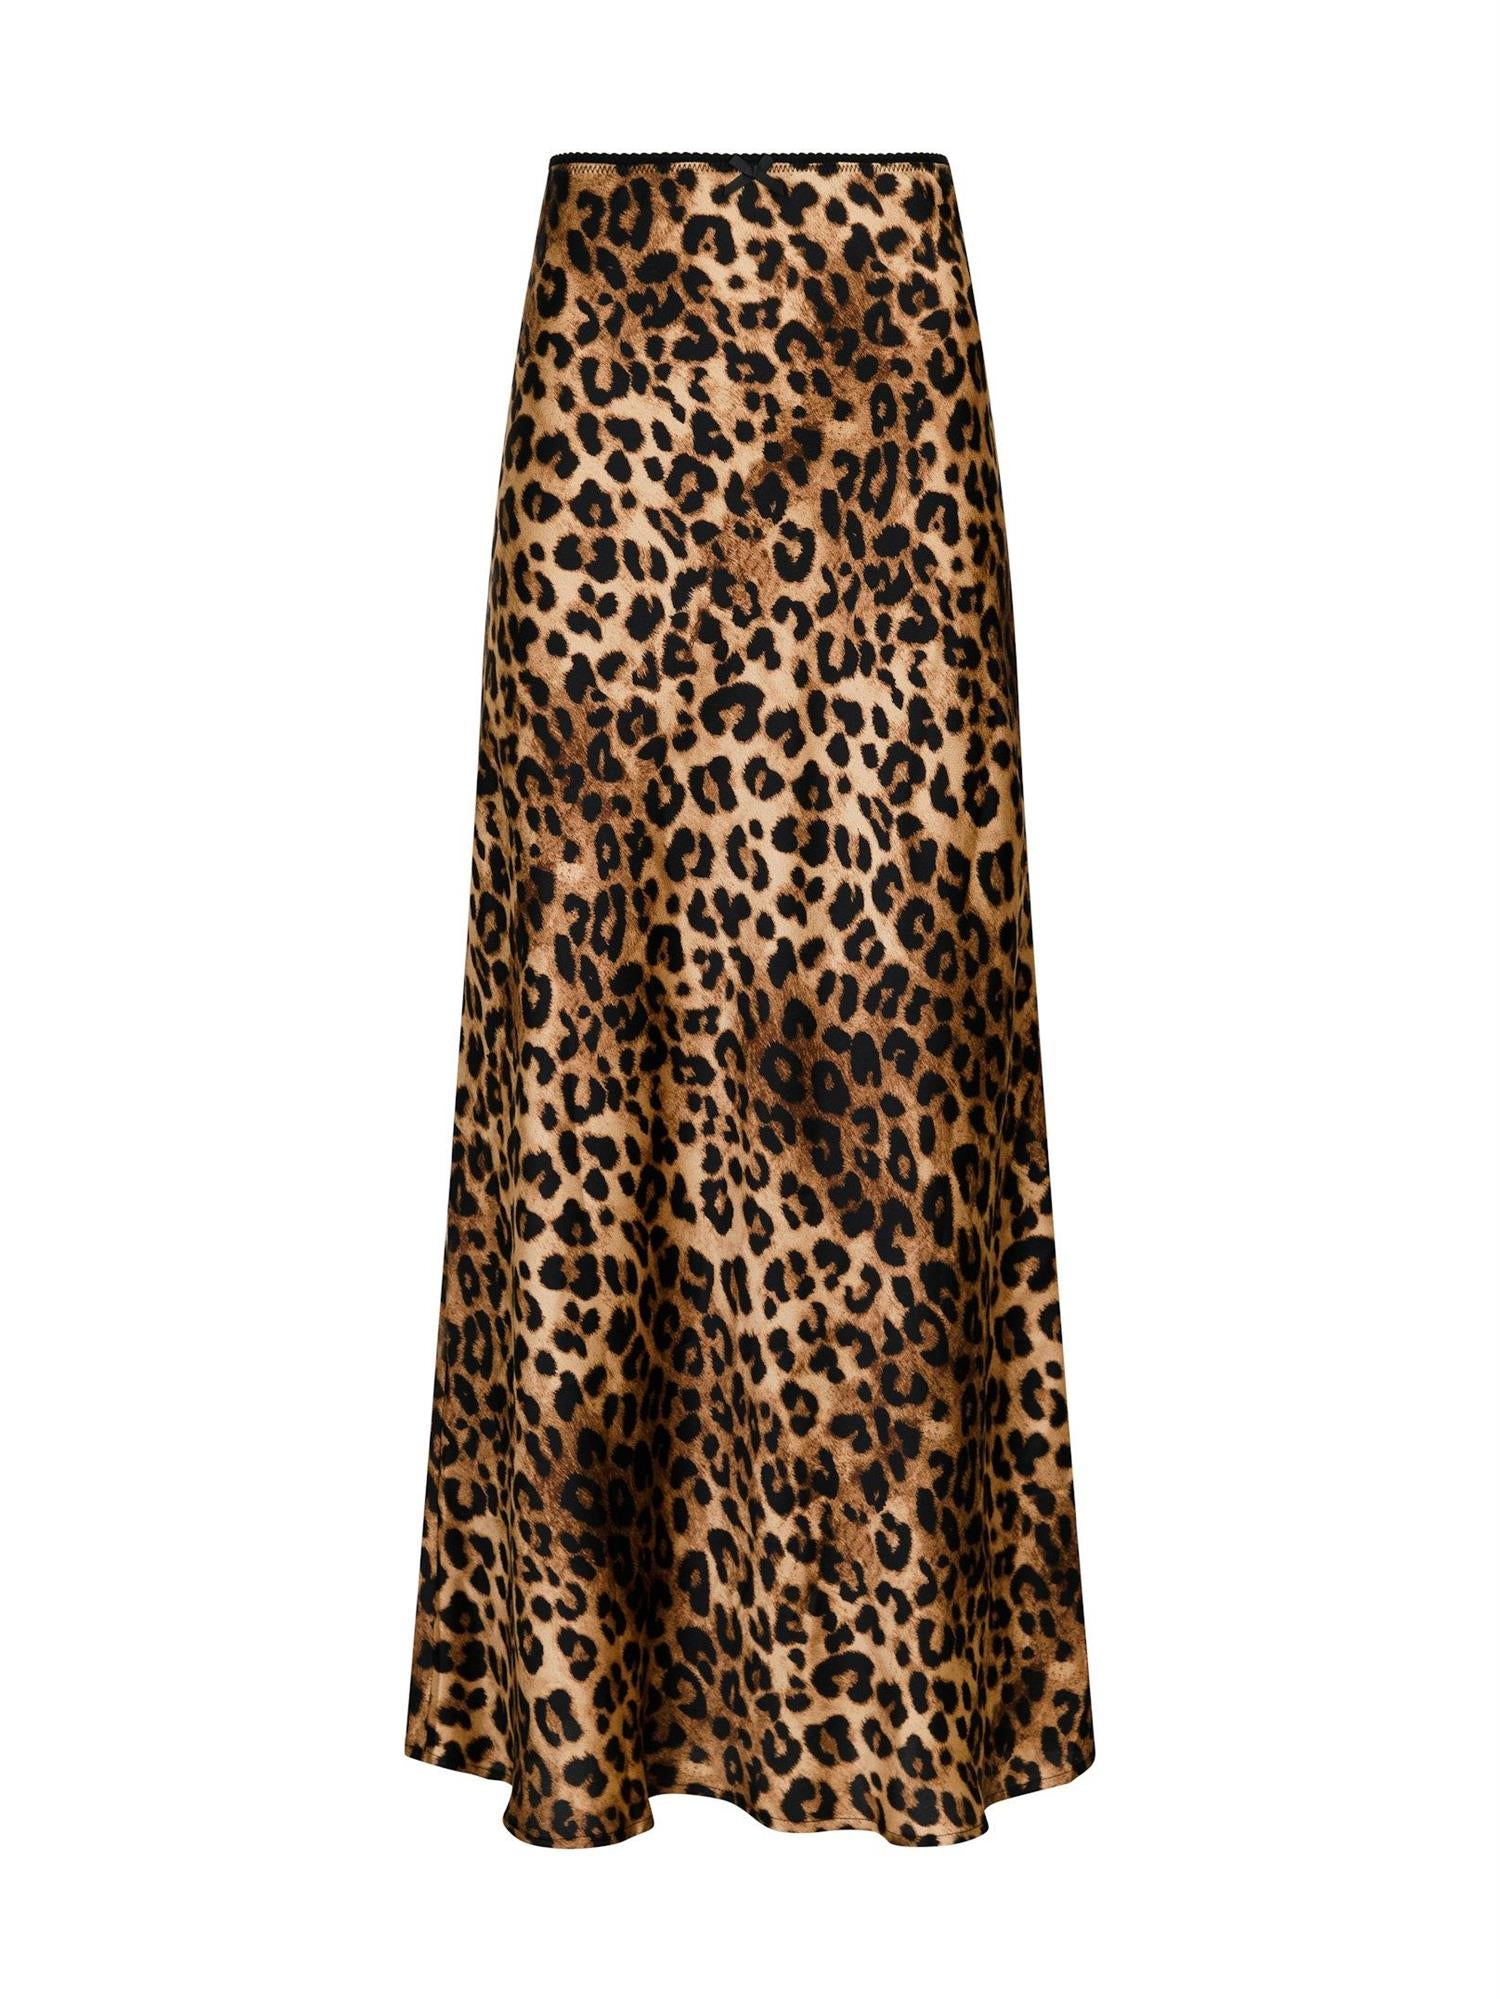 NEO NOIR Lola Leo Long Skirt Leopard